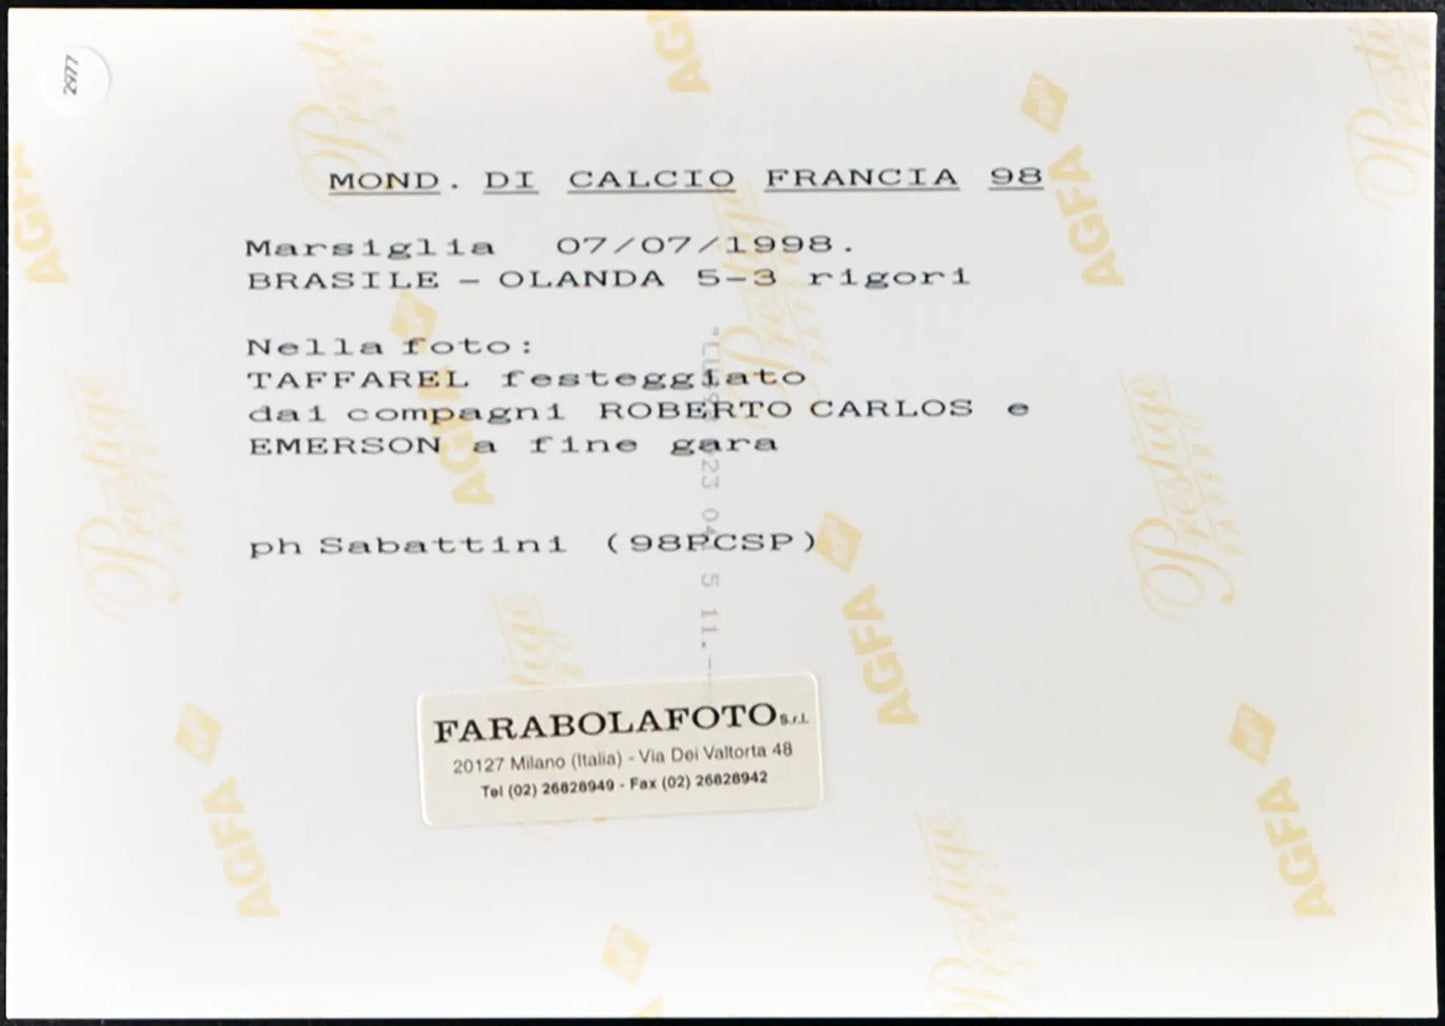 Taffarel Mondiali Francia 98 Ft 2977 - Stampa 20x15 cm - Farabola Stampa ai sali d'argento